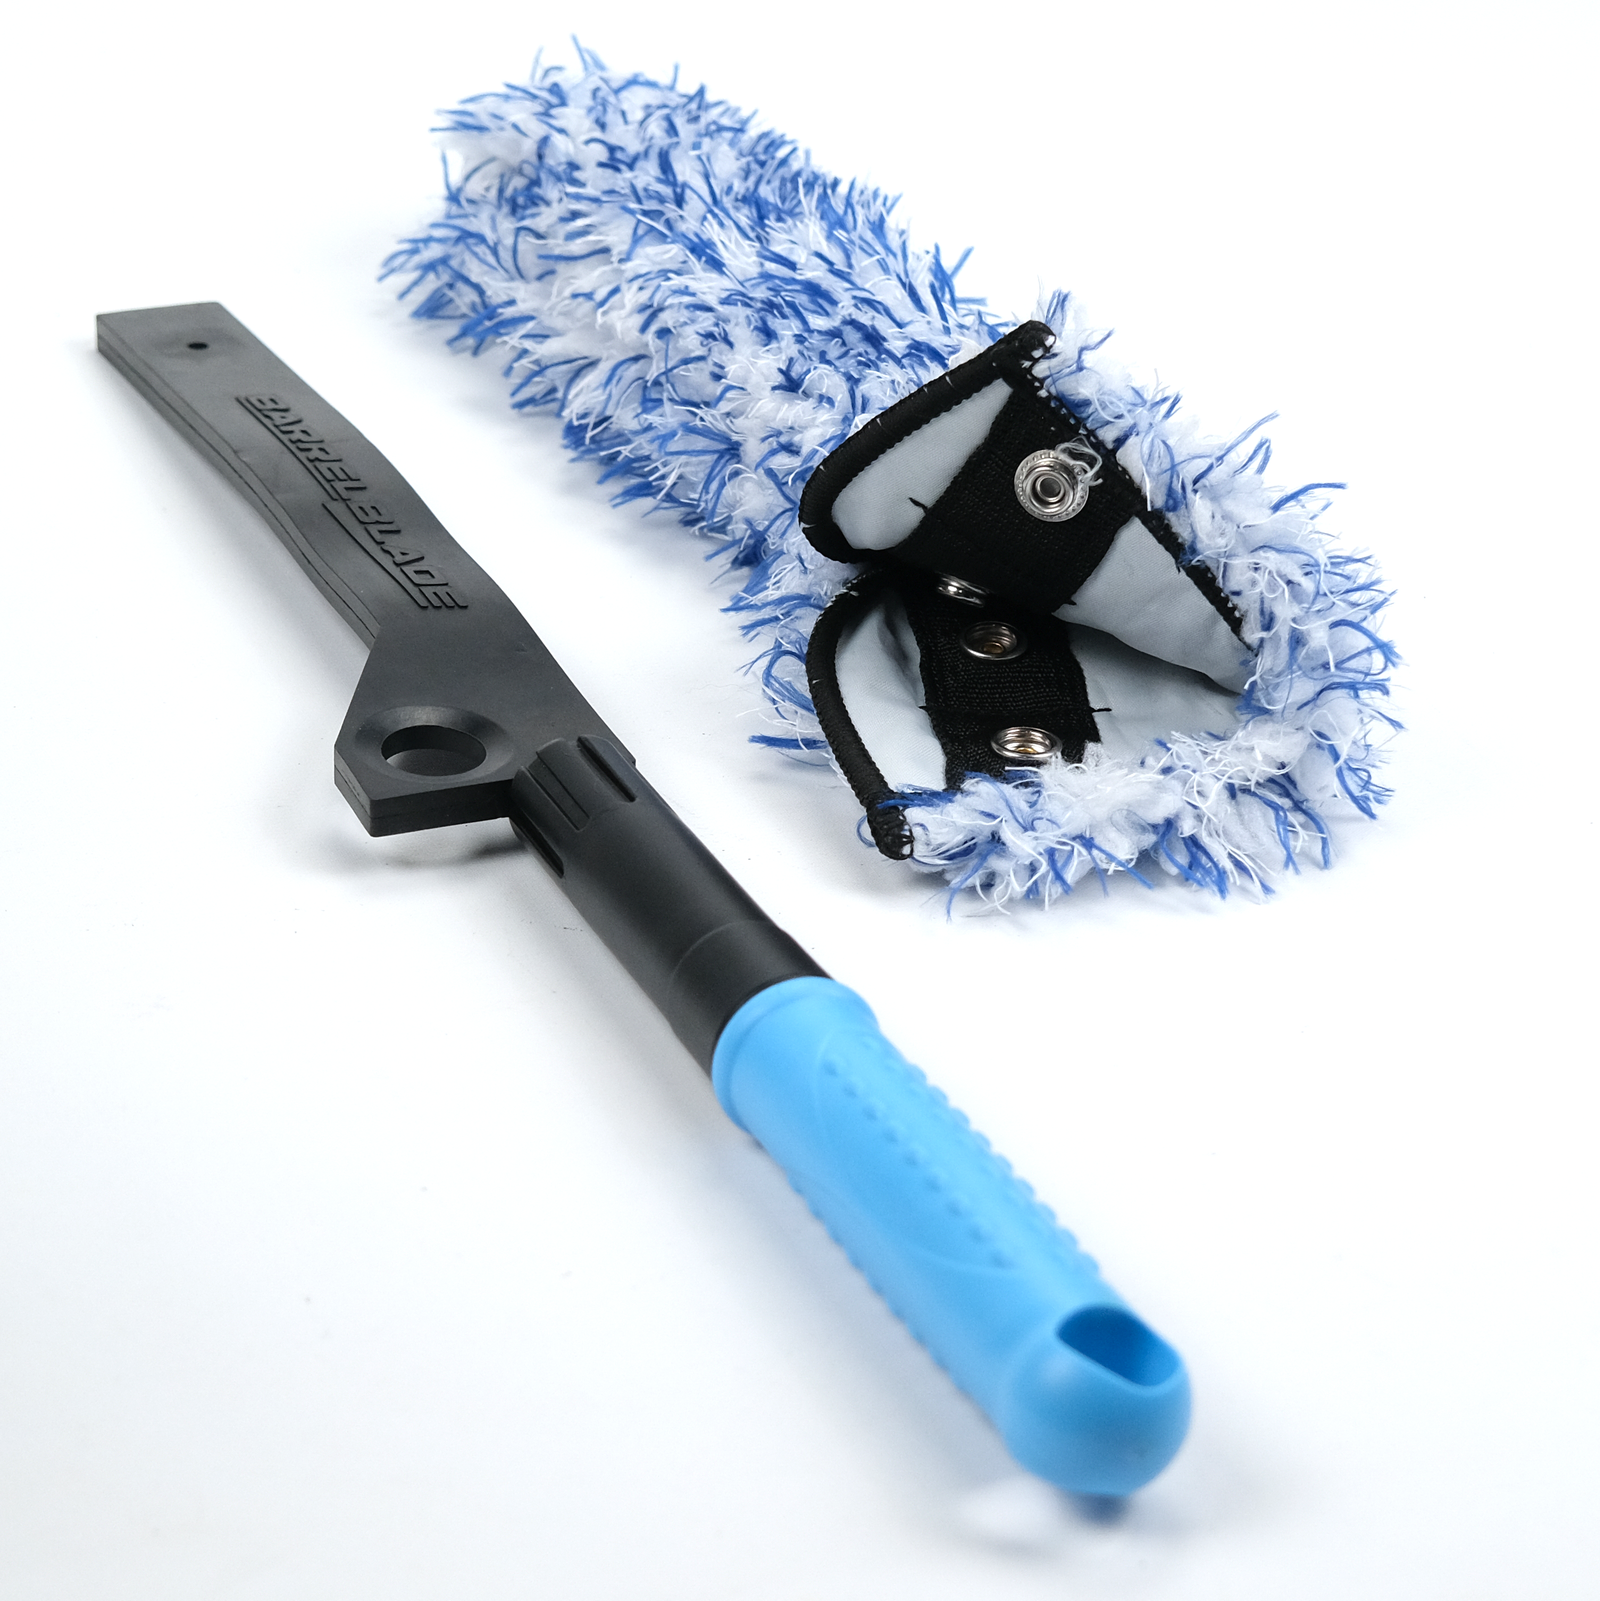 Car Wheel Brush, Microfiber Wheel Cleaner Brush, Car Wash Brush